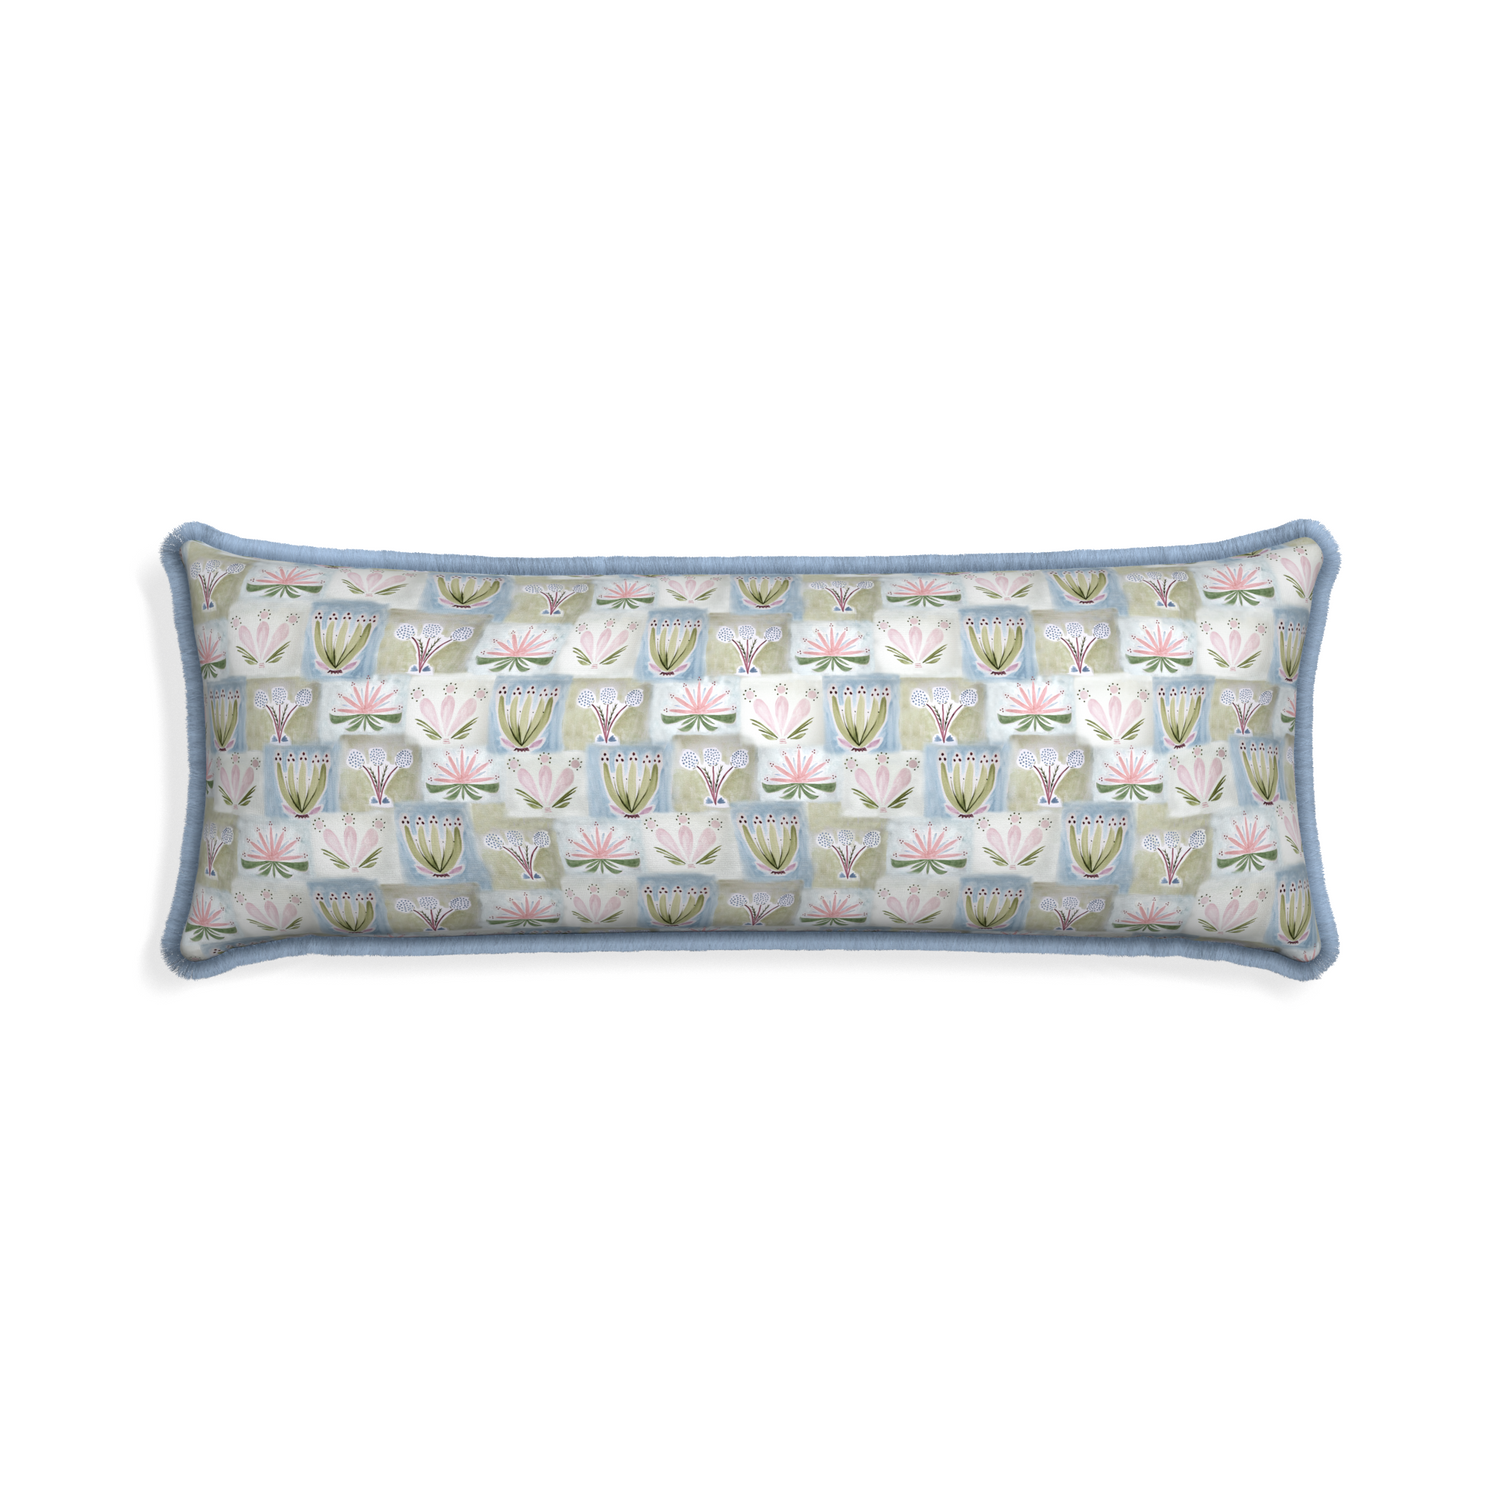 Xl-lumbar harper custom pillow with sky fringe on white background